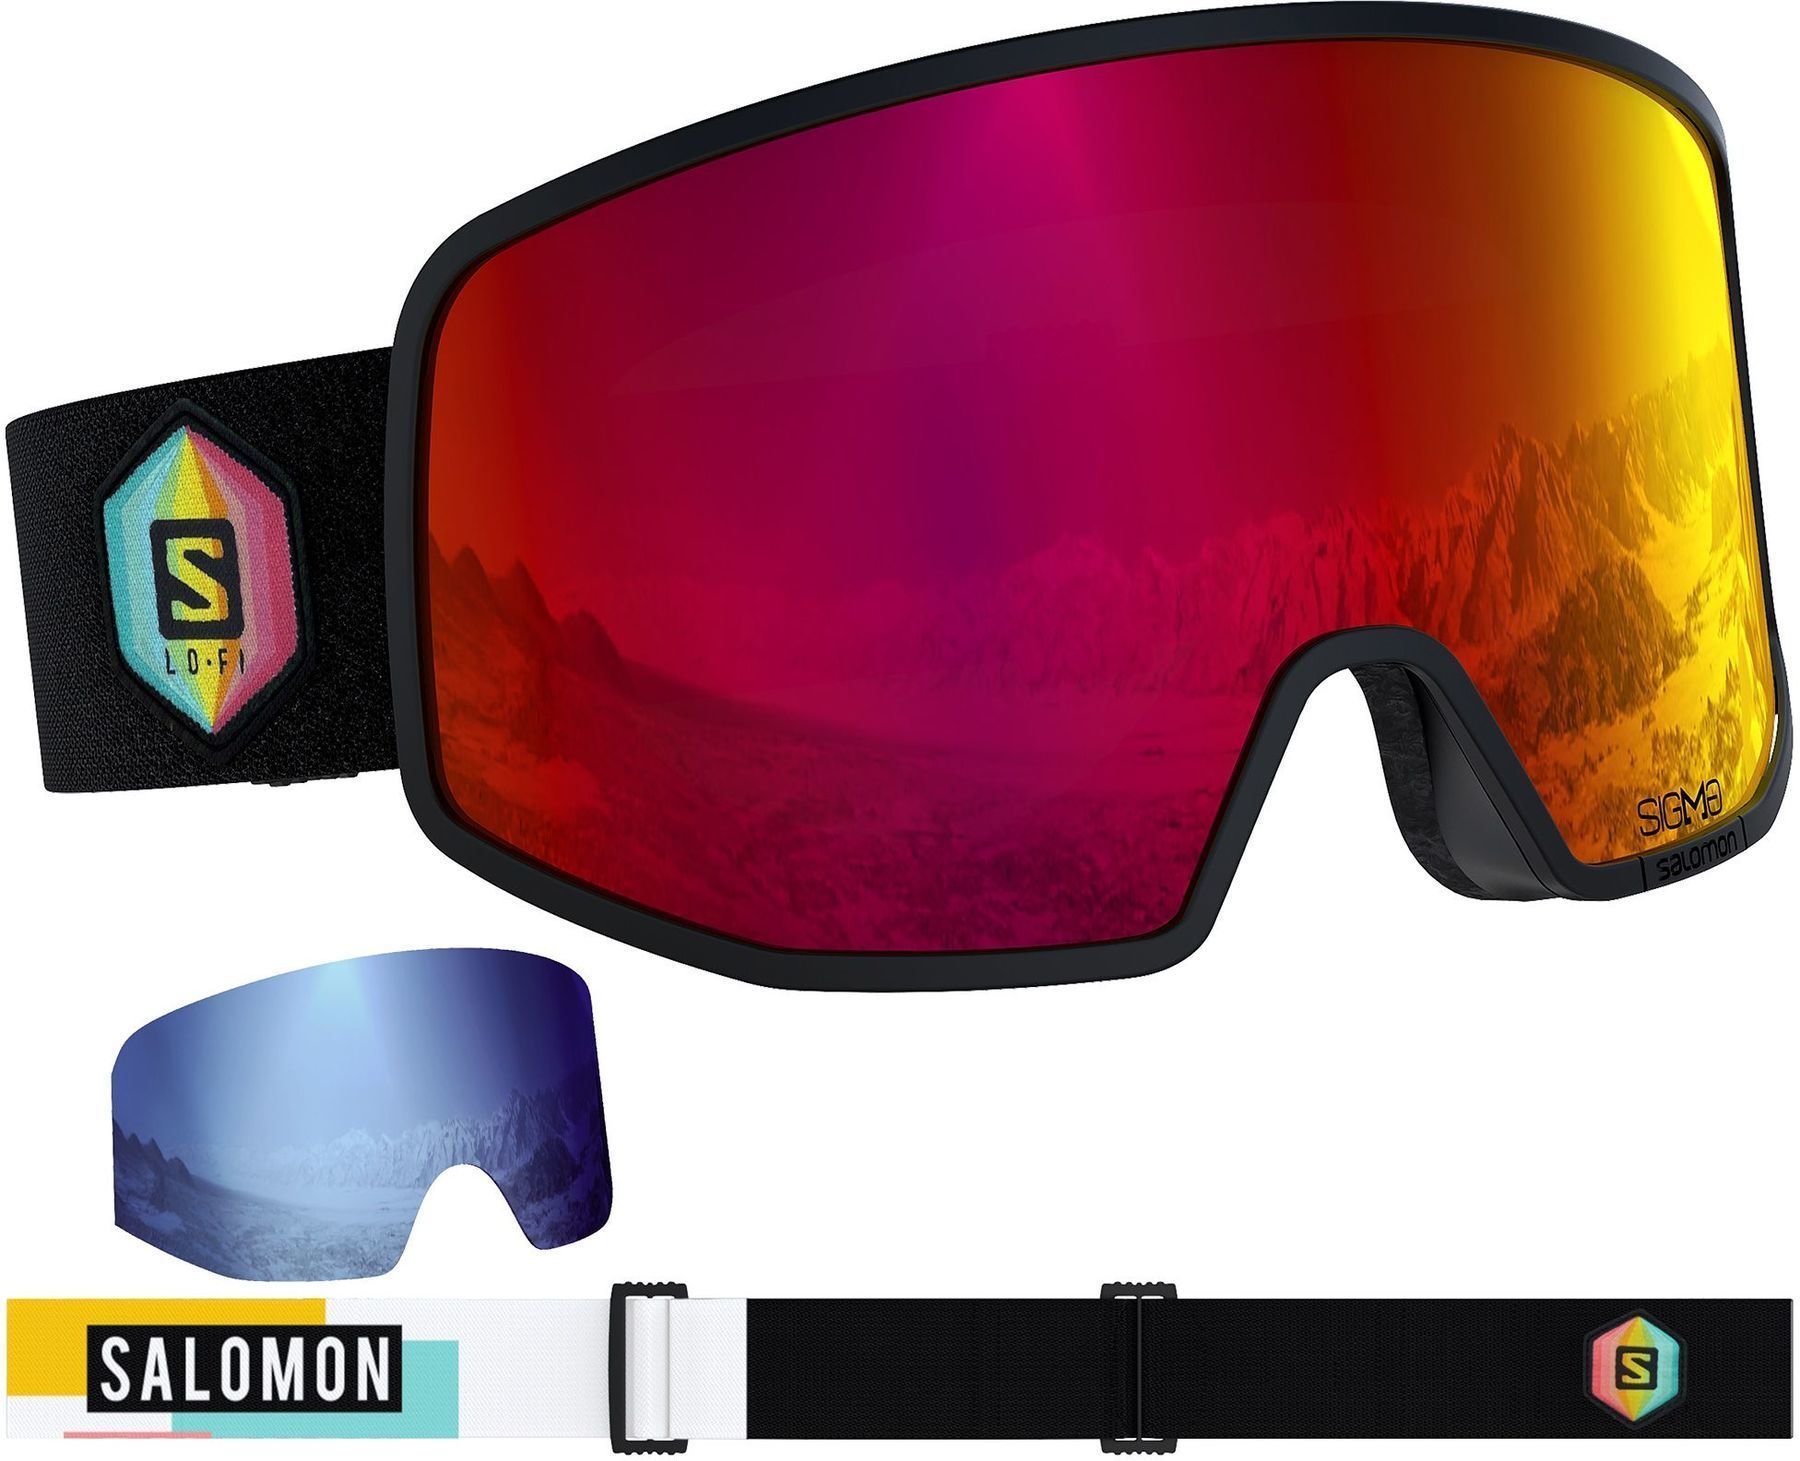 Masques de ski Salomon LO FI Sigma Black/Safran Masques de ski